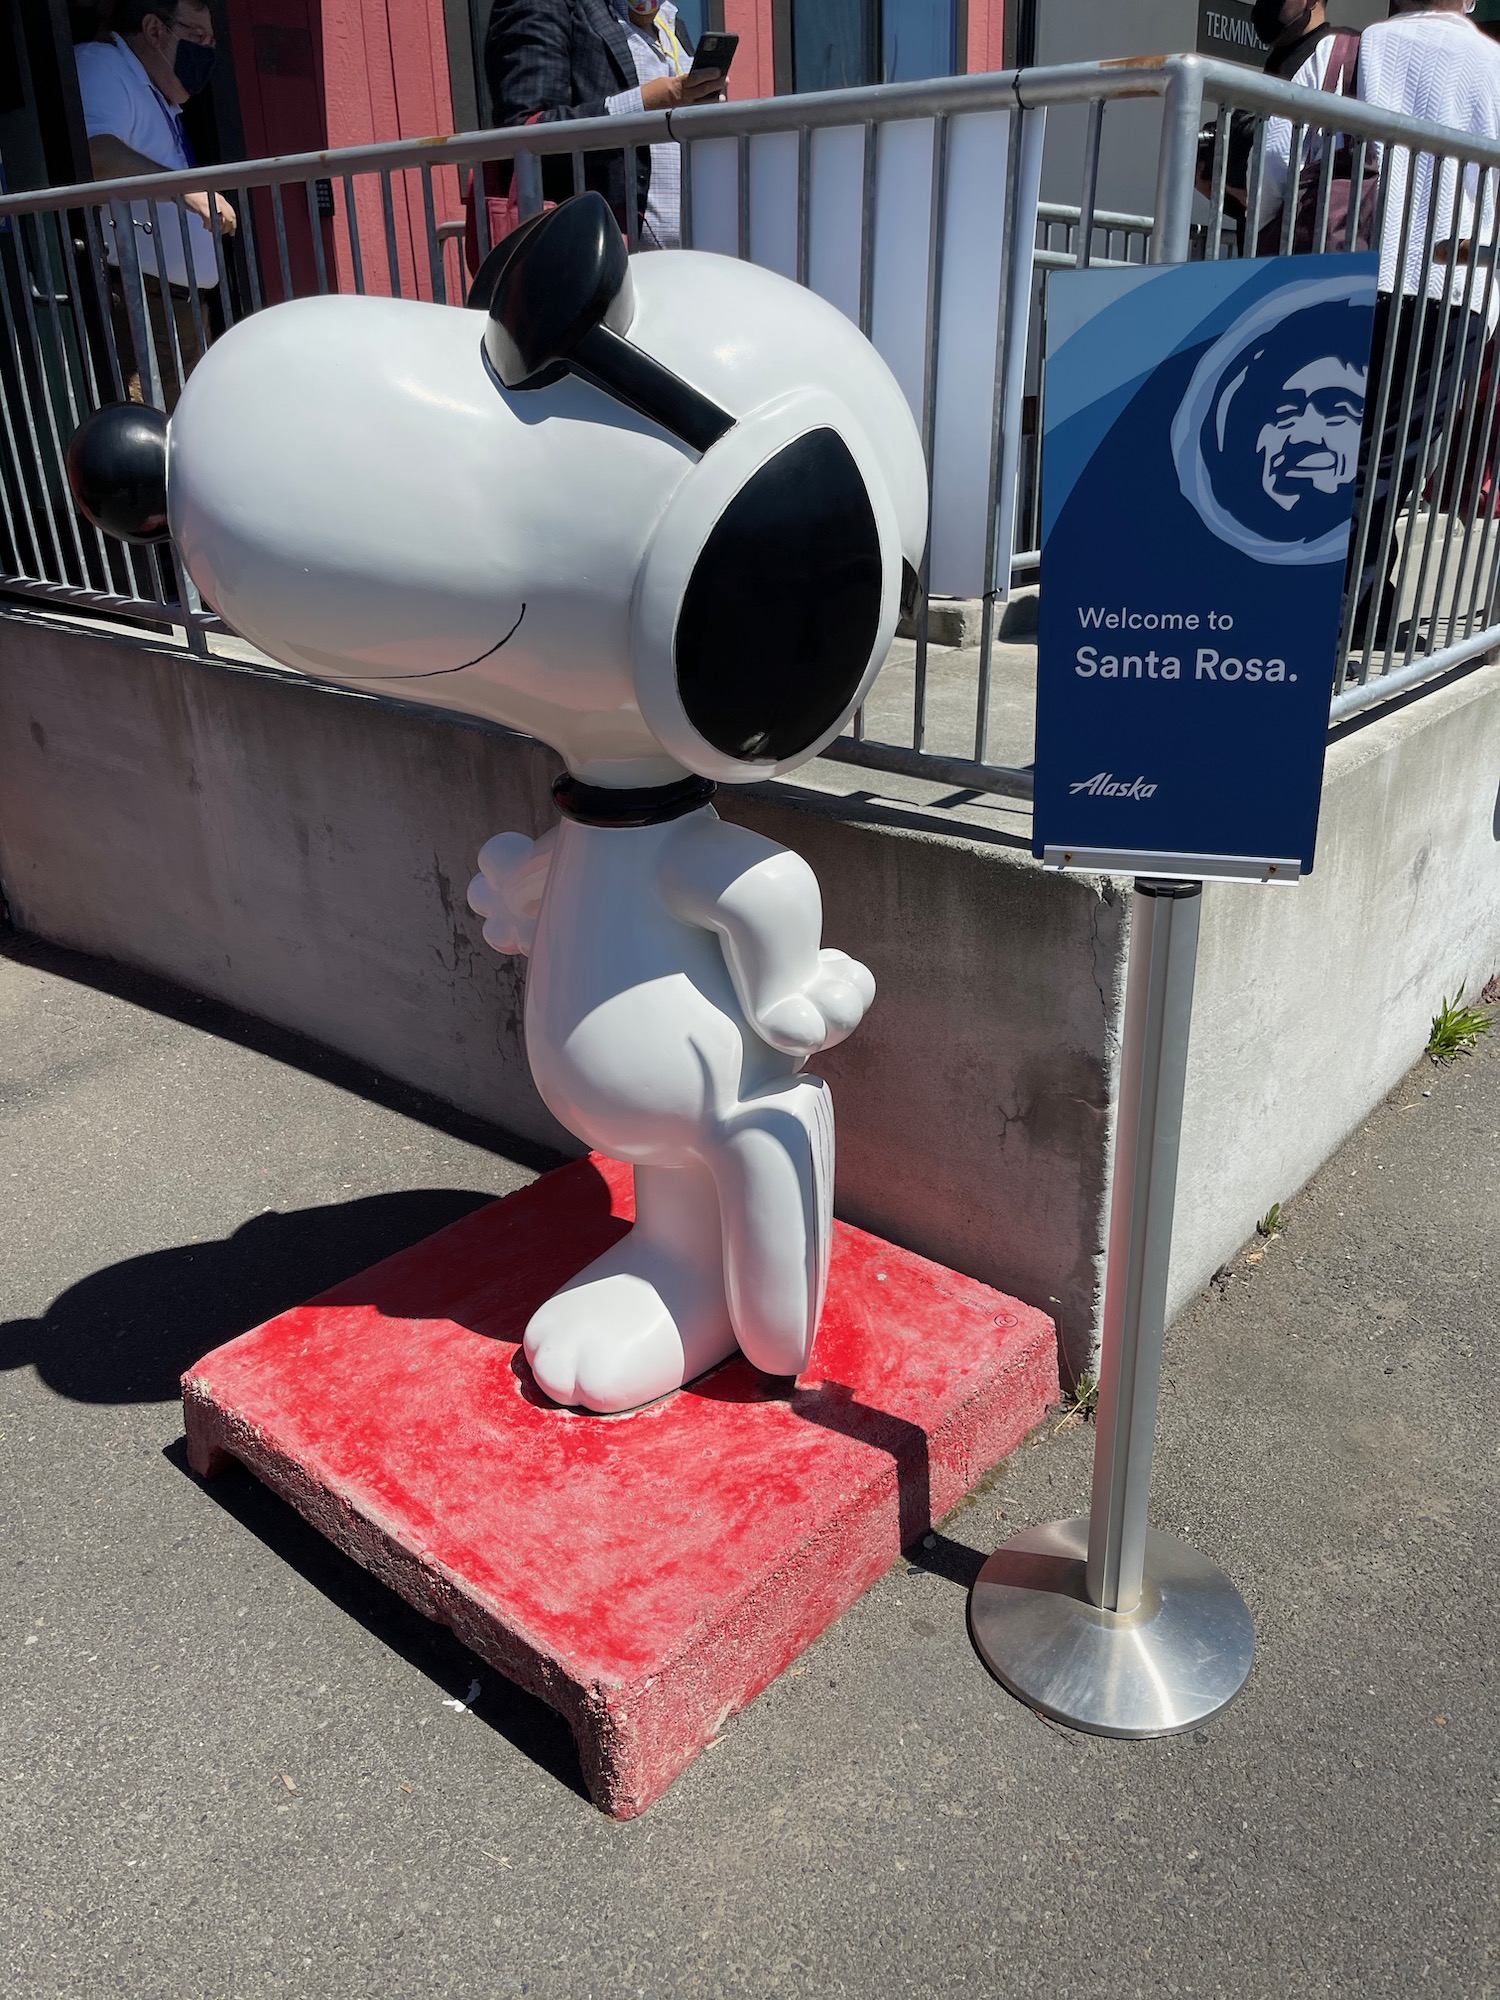 a statue of a dog on a platform